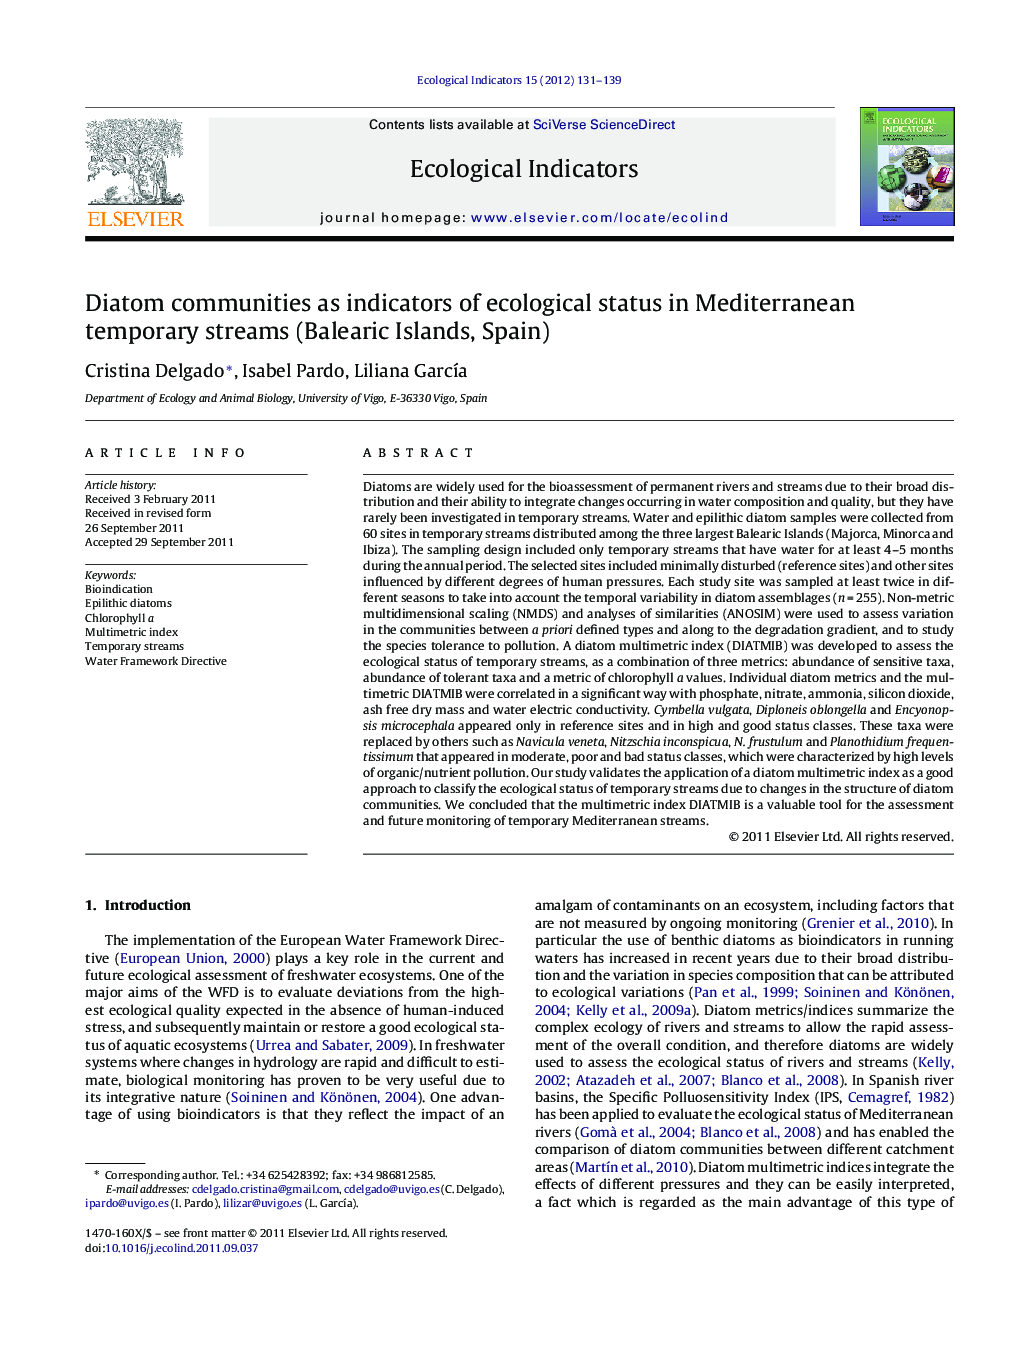 Diatom communities as indicators of ecological status in Mediterranean temporary streams (Balearic Islands, Spain)